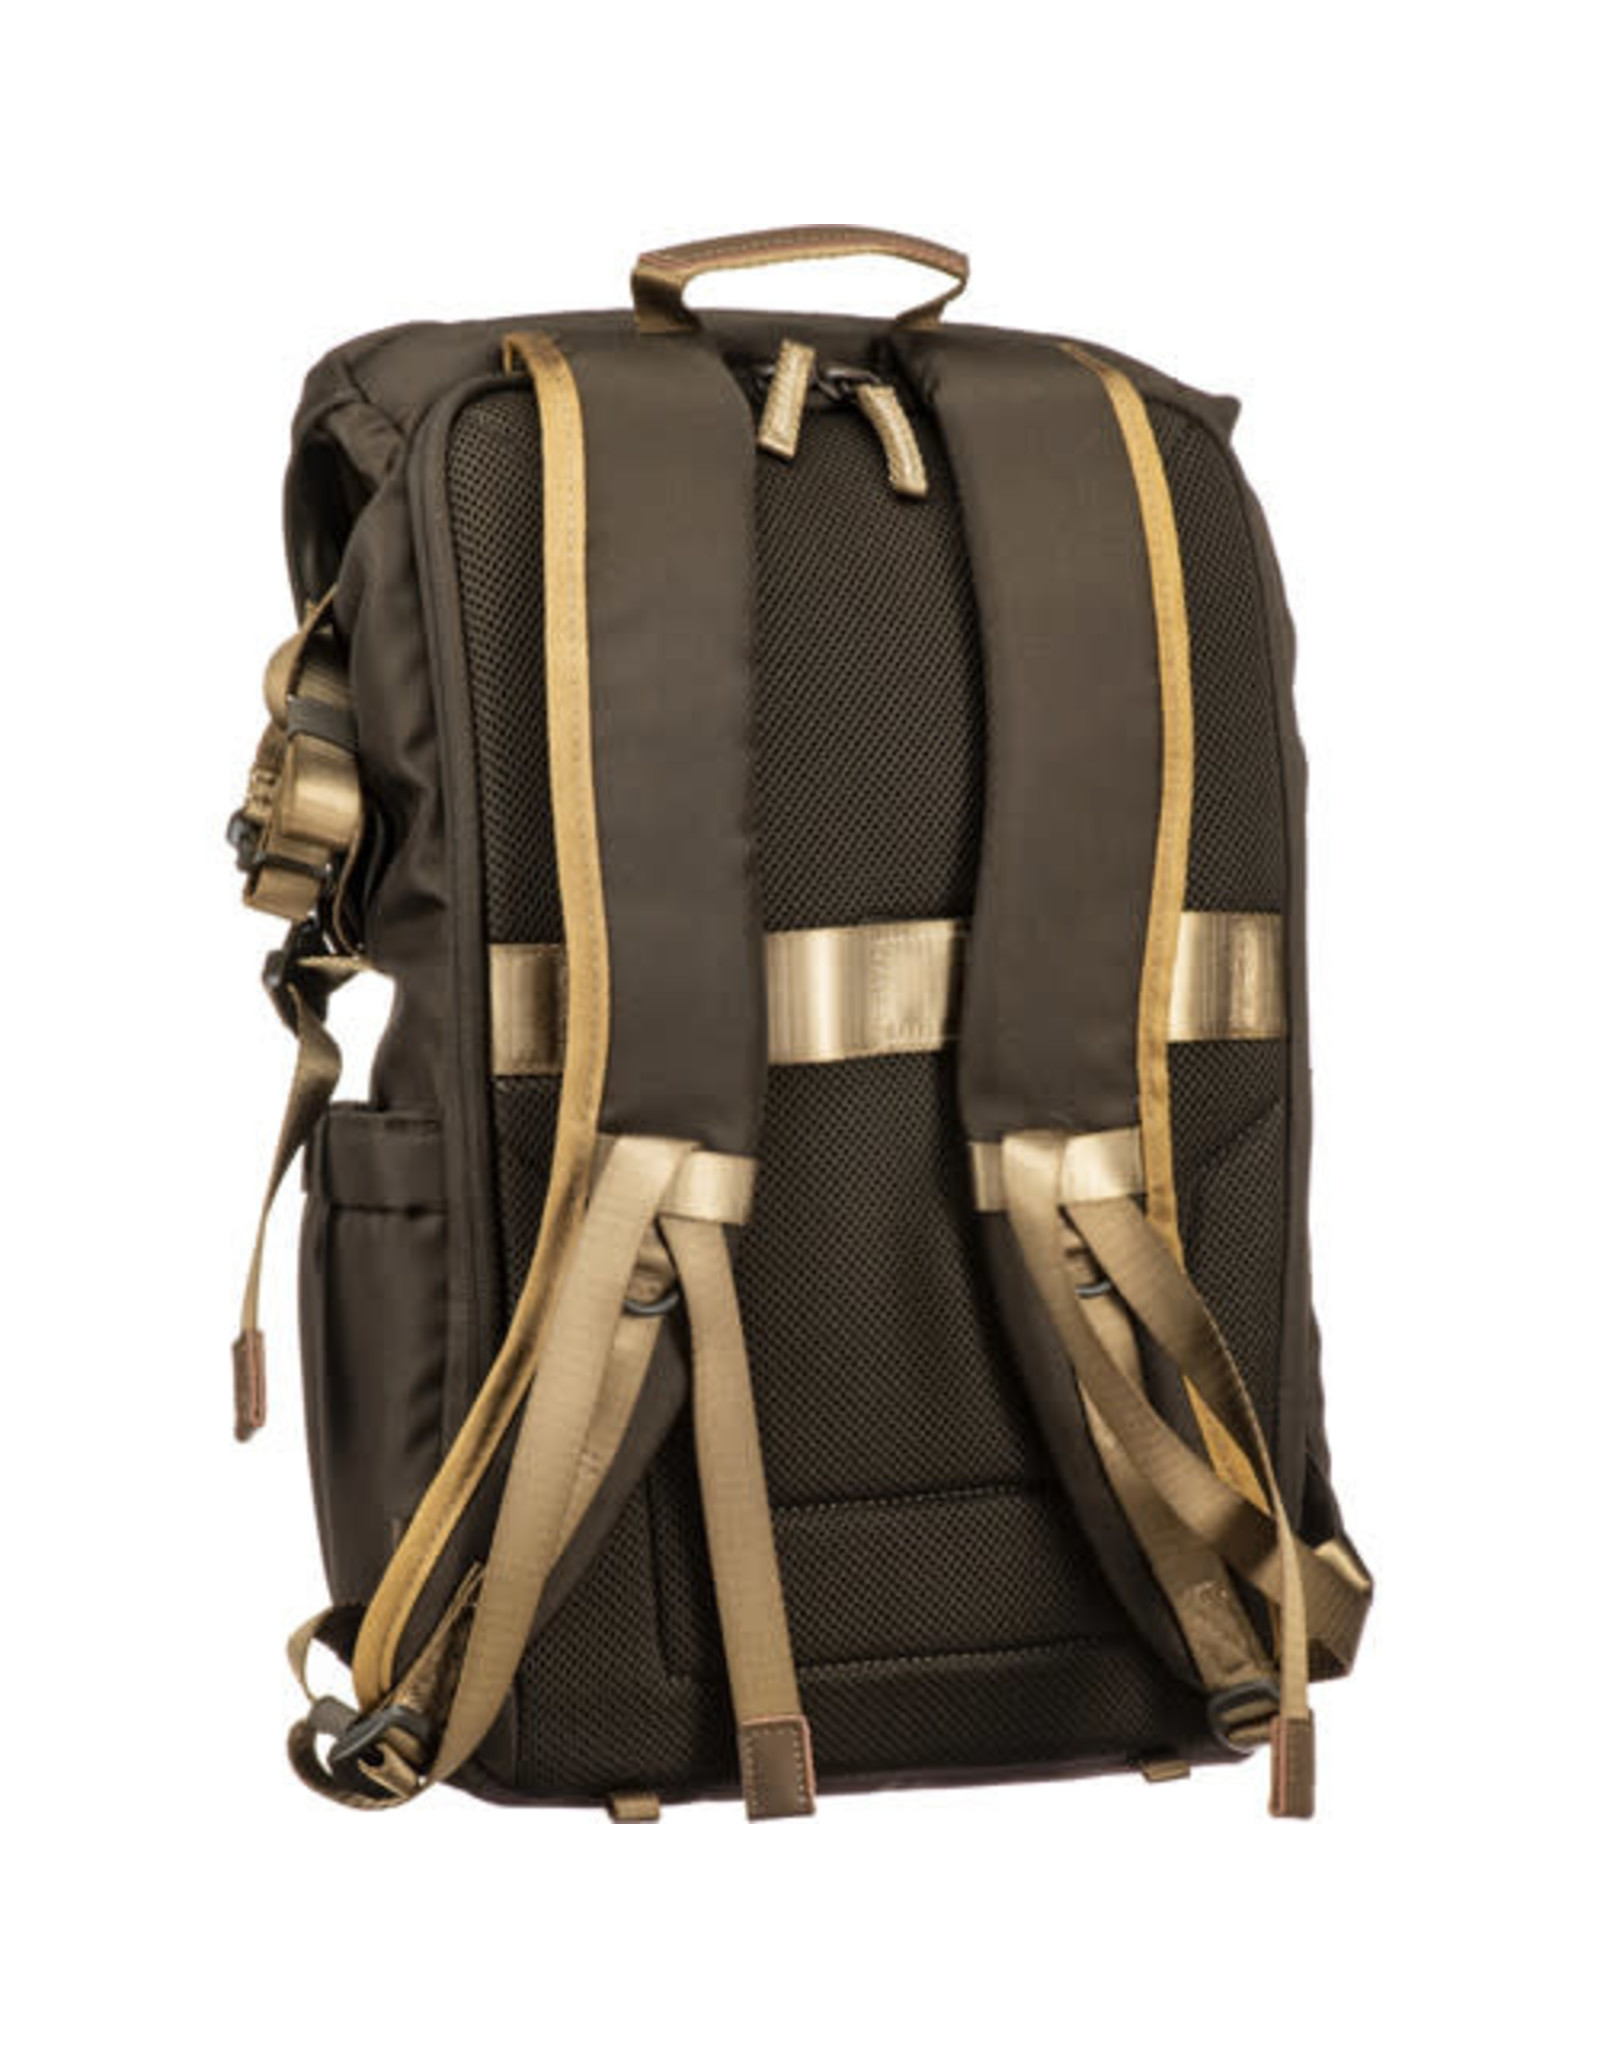 Vanguard Vanguard VEO GM 46M Backpack (Choose Color)